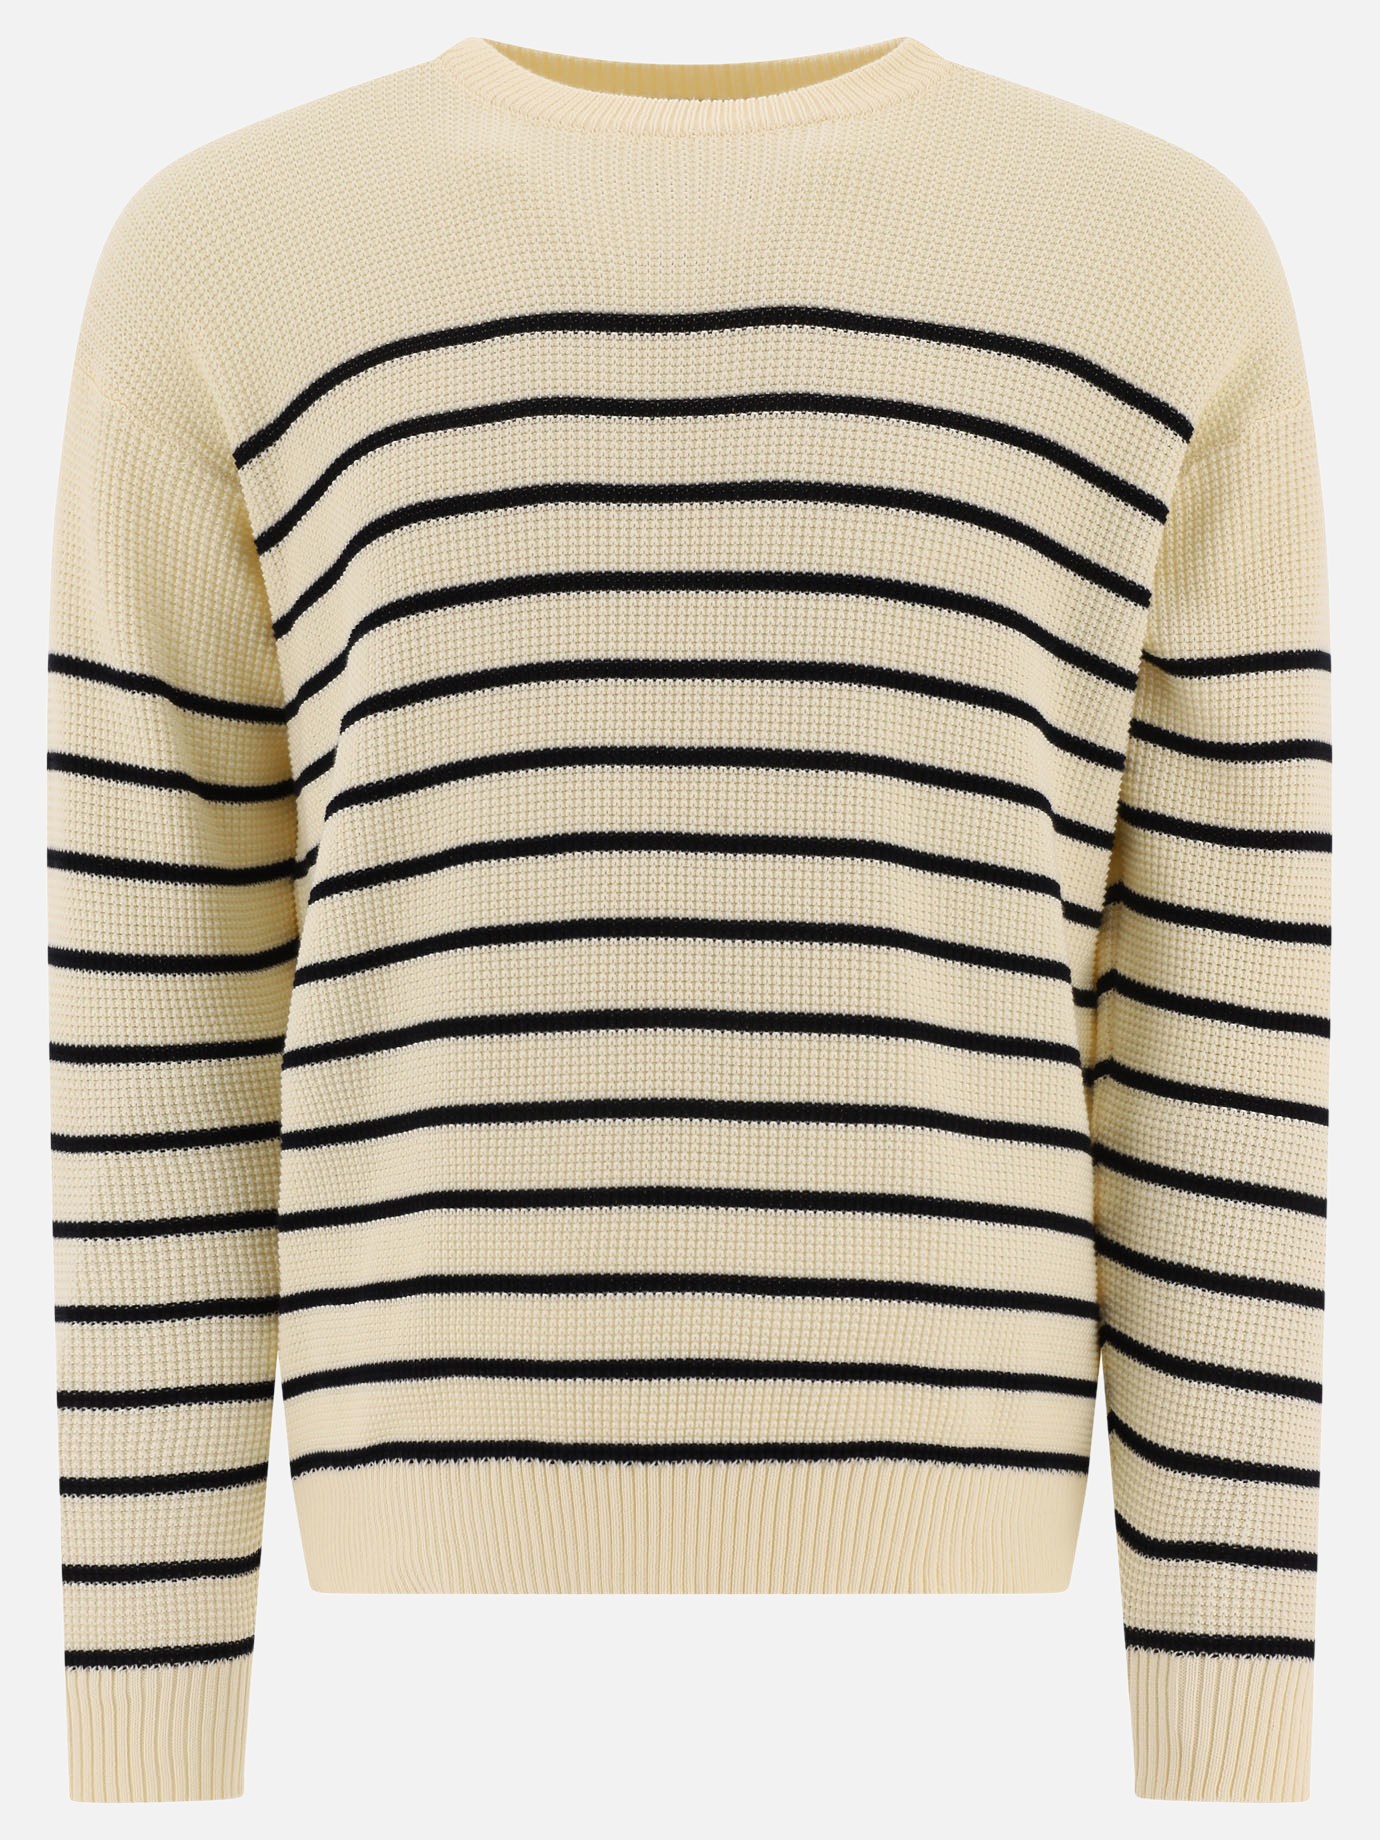 Striped sweaterby Roberto Collina - 1